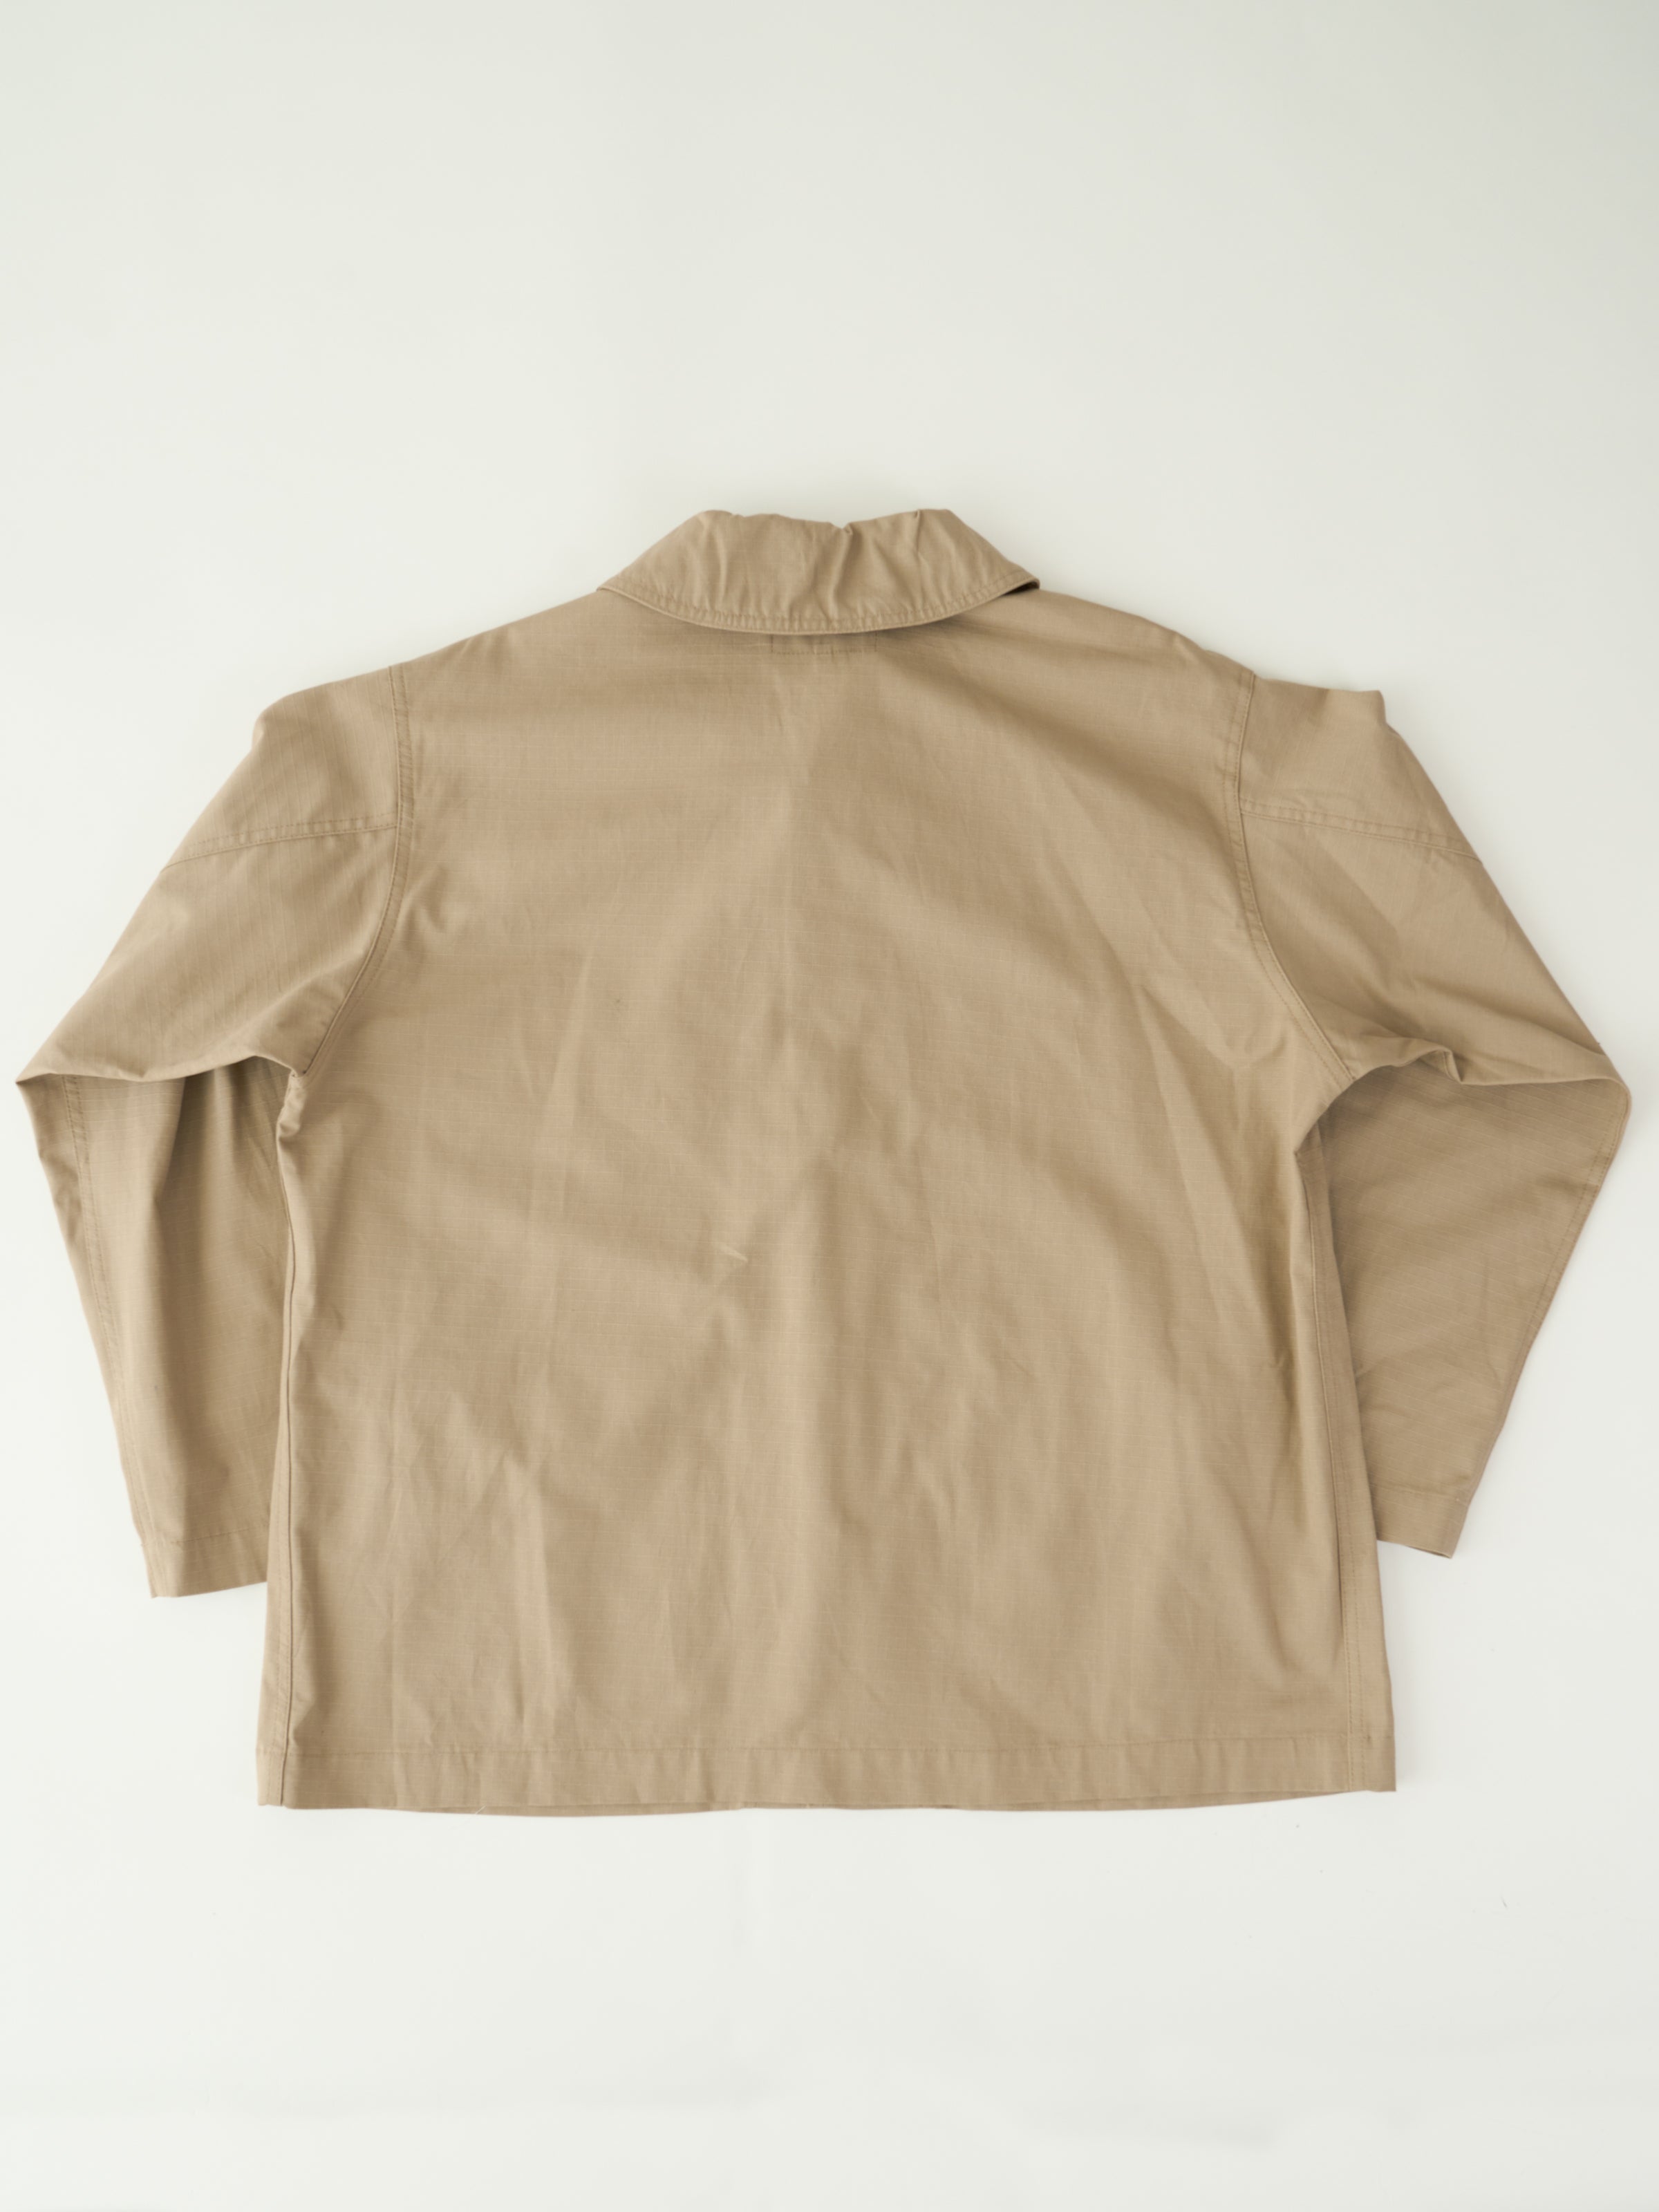 Shawl Collar Jacket - Khaki Cotton Ripstop